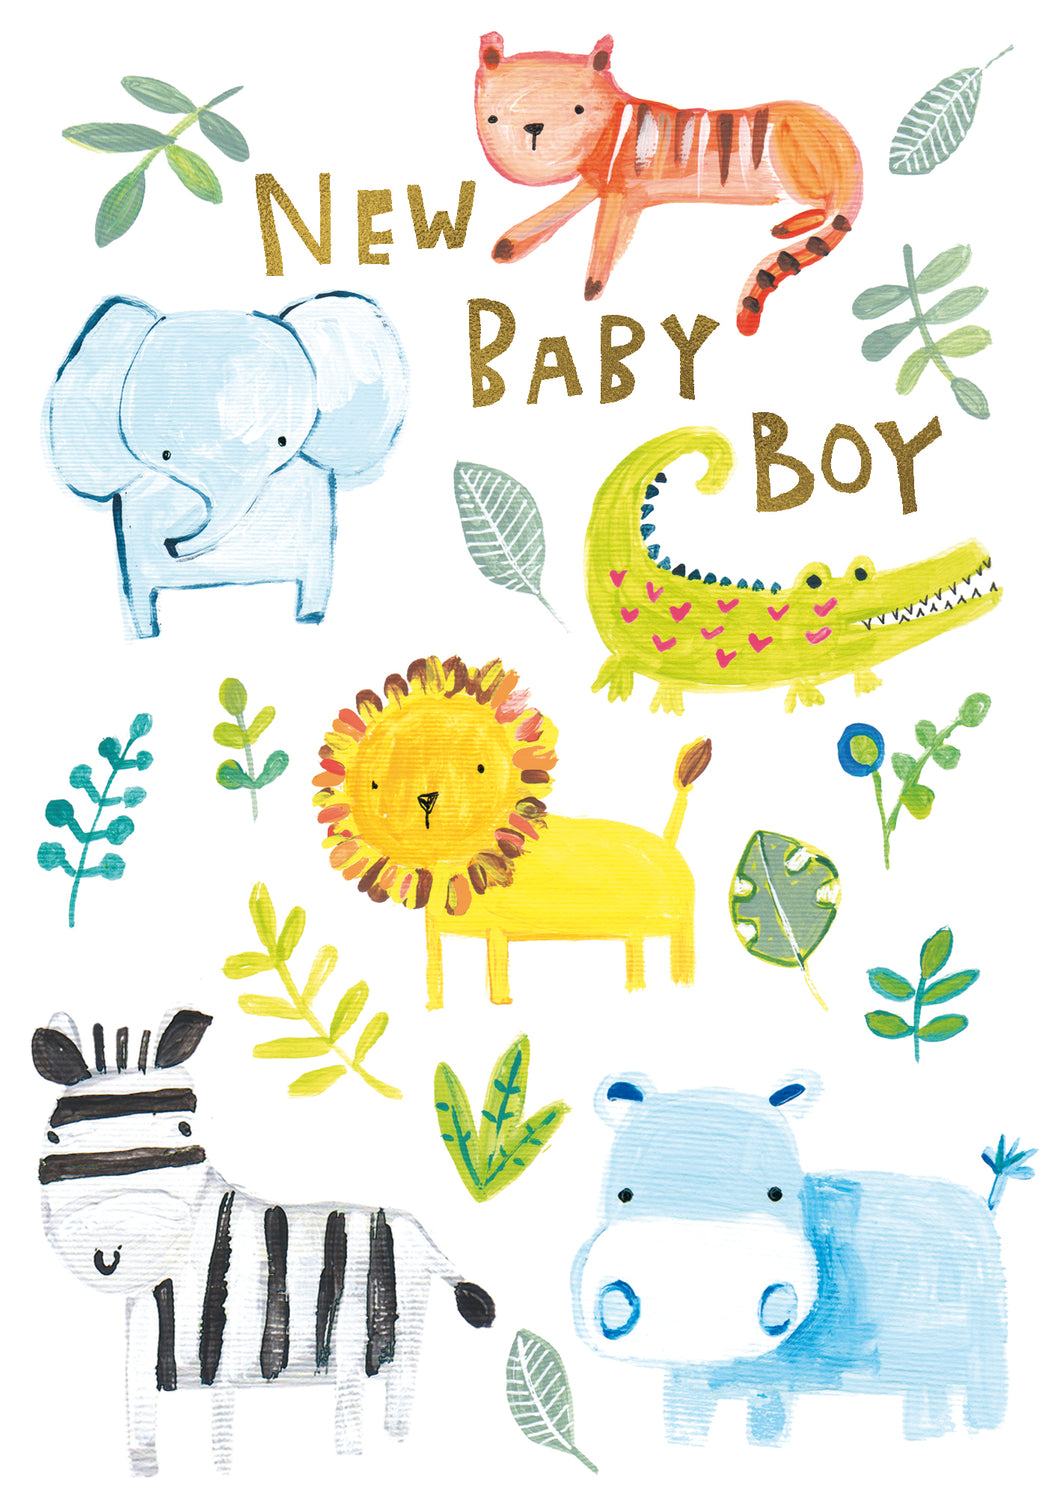 New baby boy - The Alresford Gift Shop